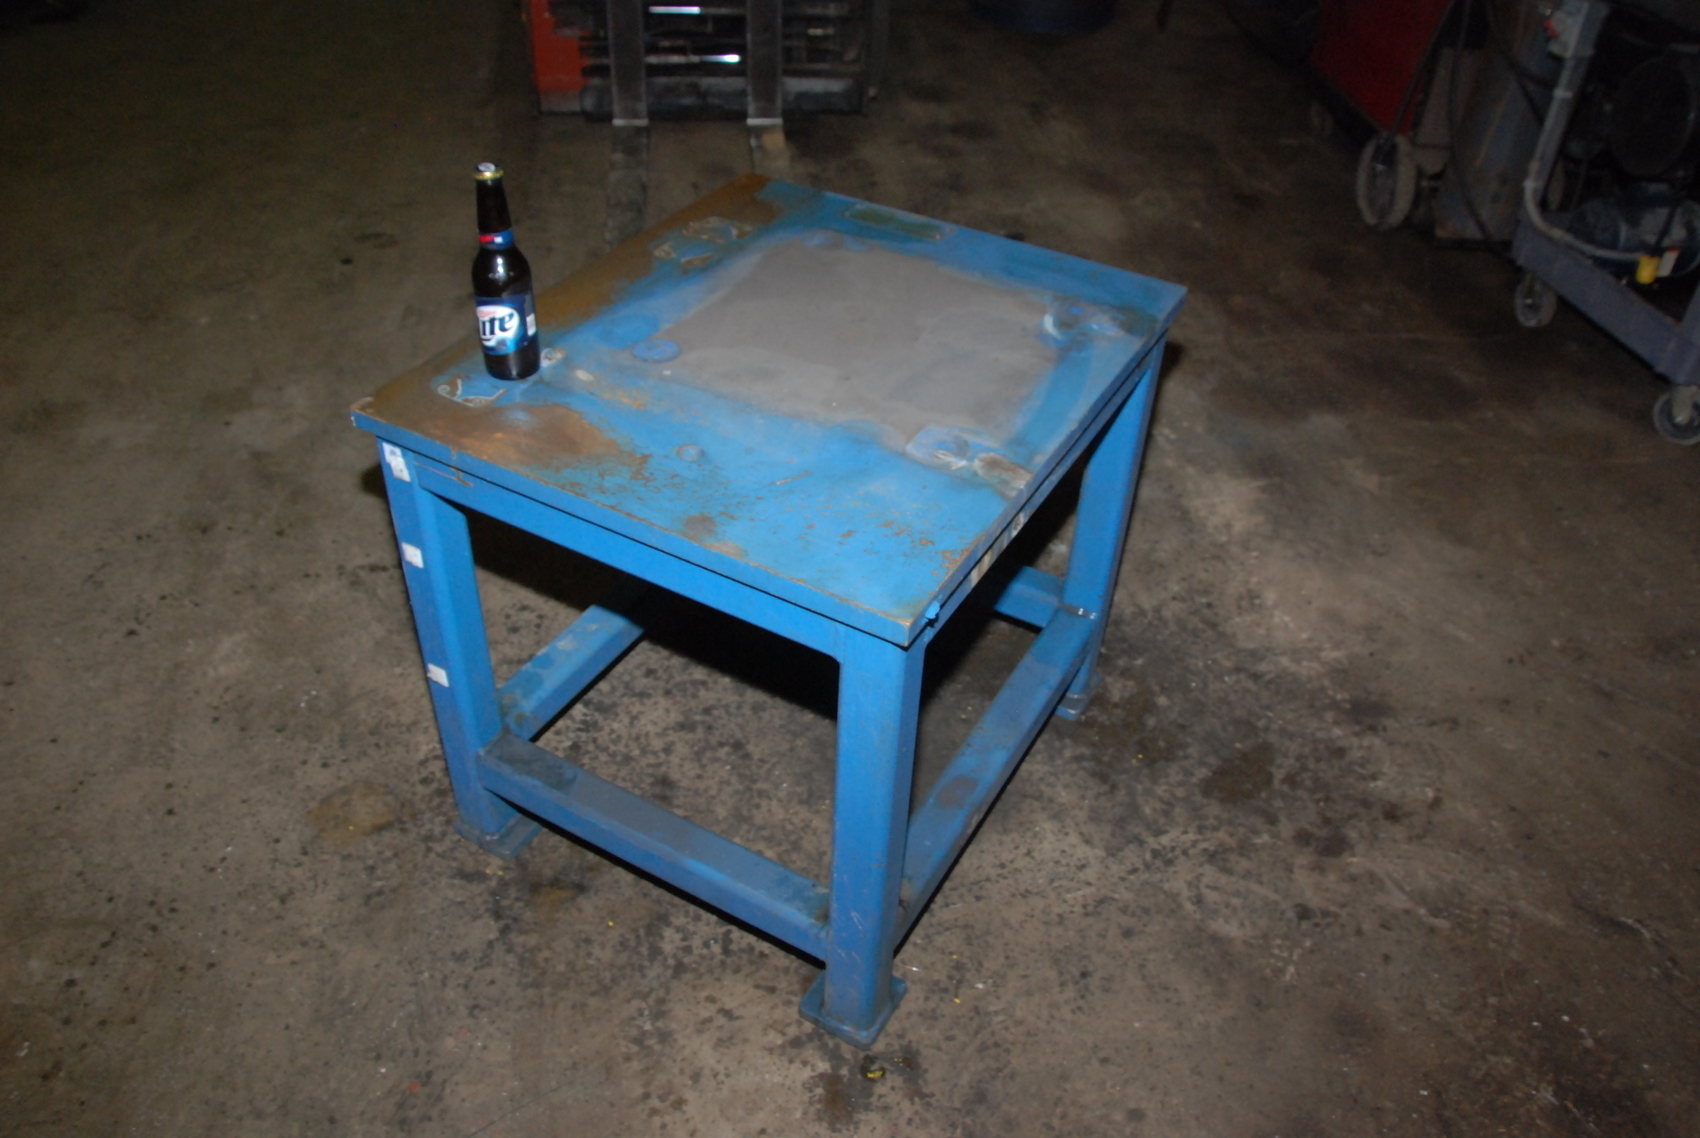 Heavy duty vibratory welding table;30x26x27";1"thick